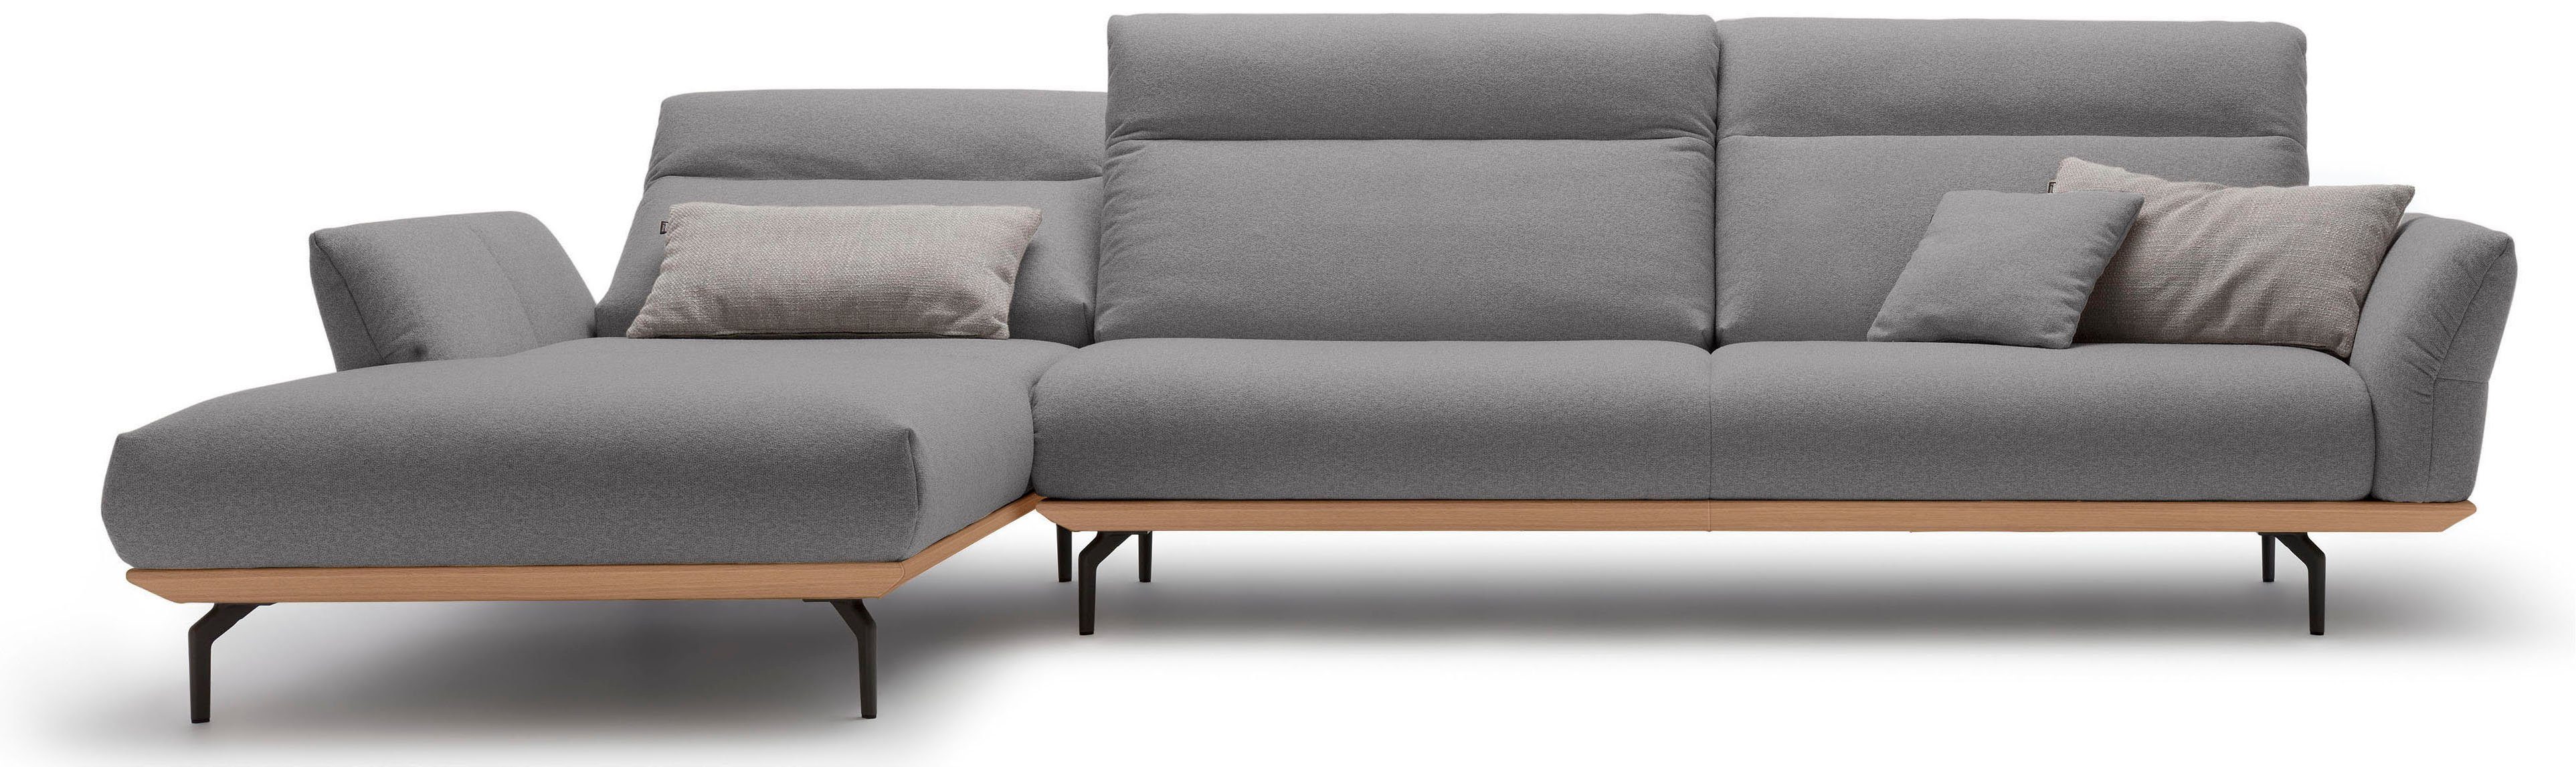 hülsta sofa Winkelfüße Umbragrau, Sockel Ecksofa in 338 in Eiche, hs.460, Breite cm